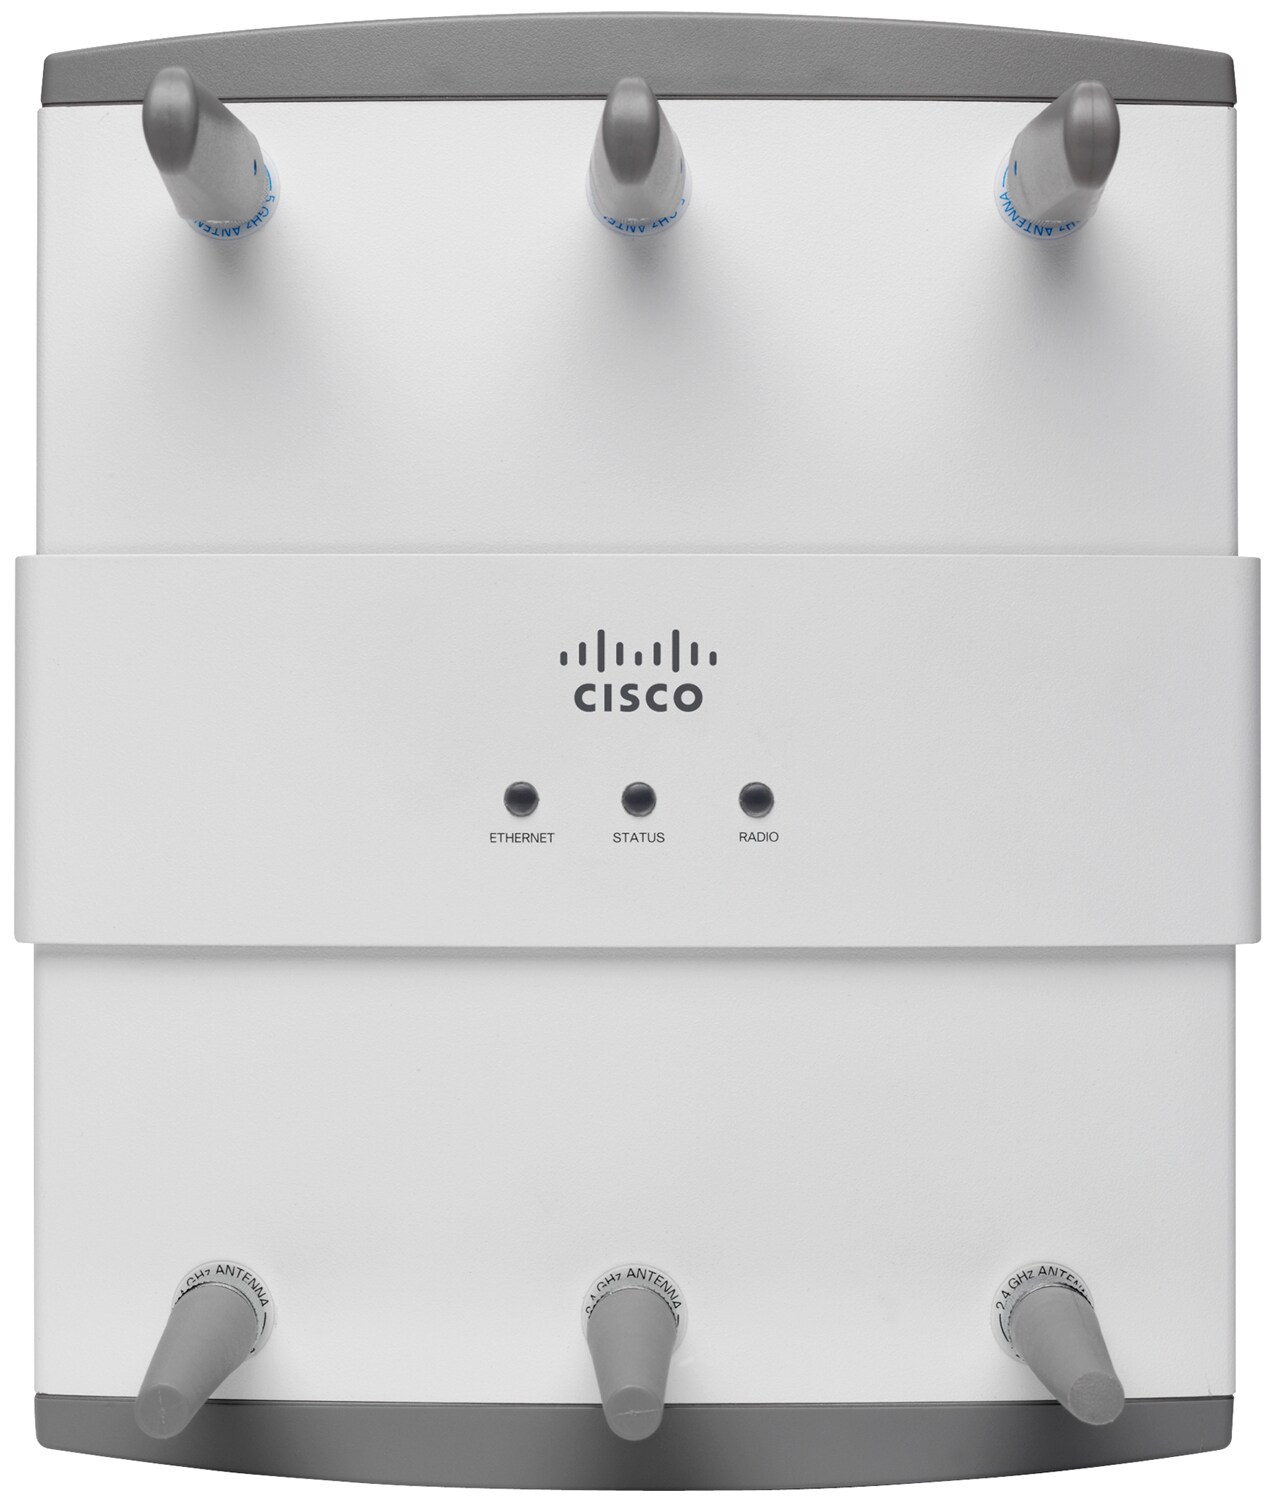 Cisco 802.11a/g/n 2.4/5GHz Modular Unified Access Point